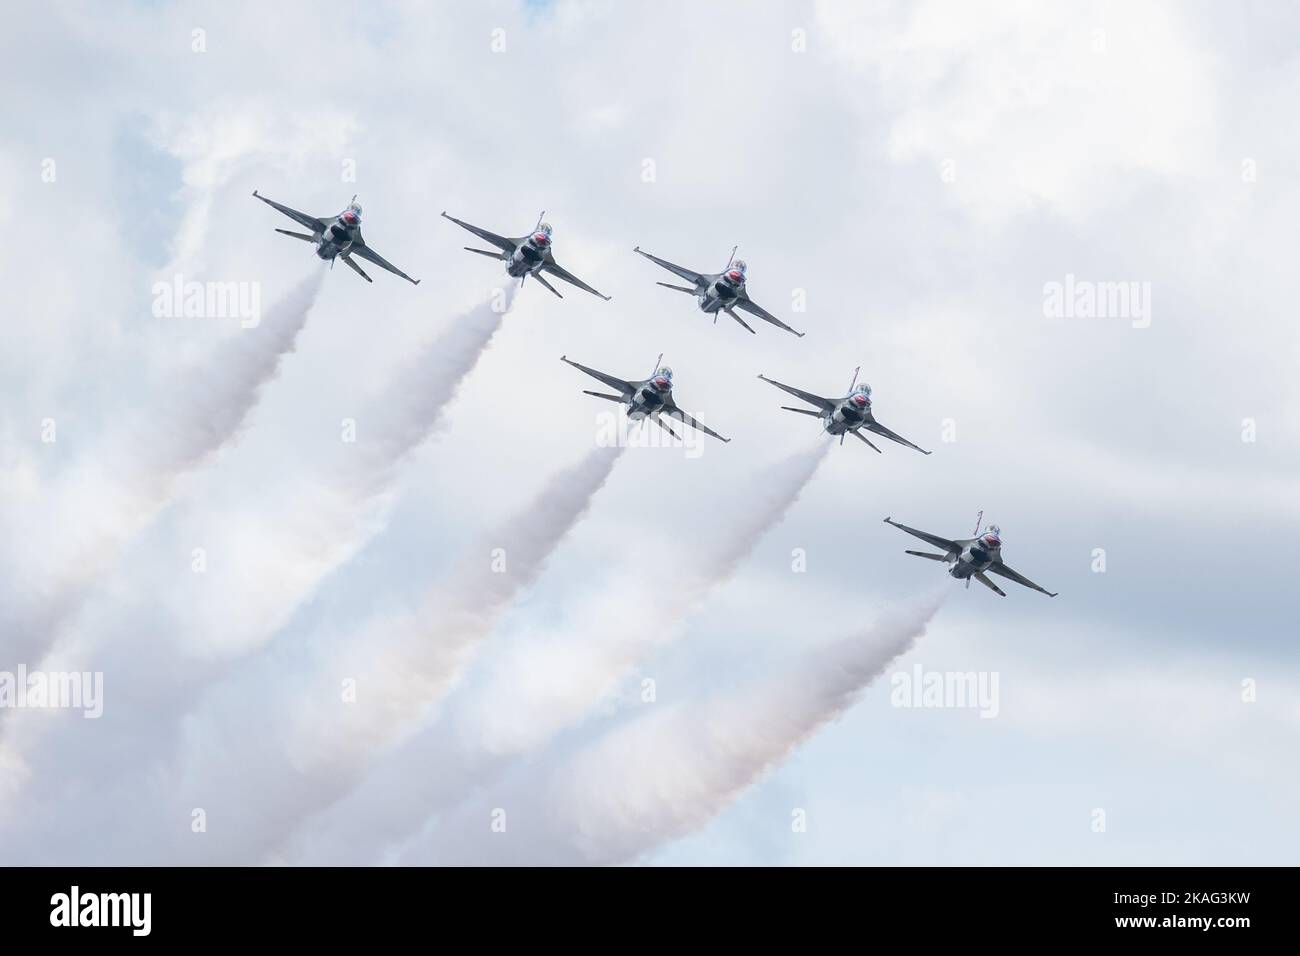 USAF Thunderbirds — Florida International Air Show